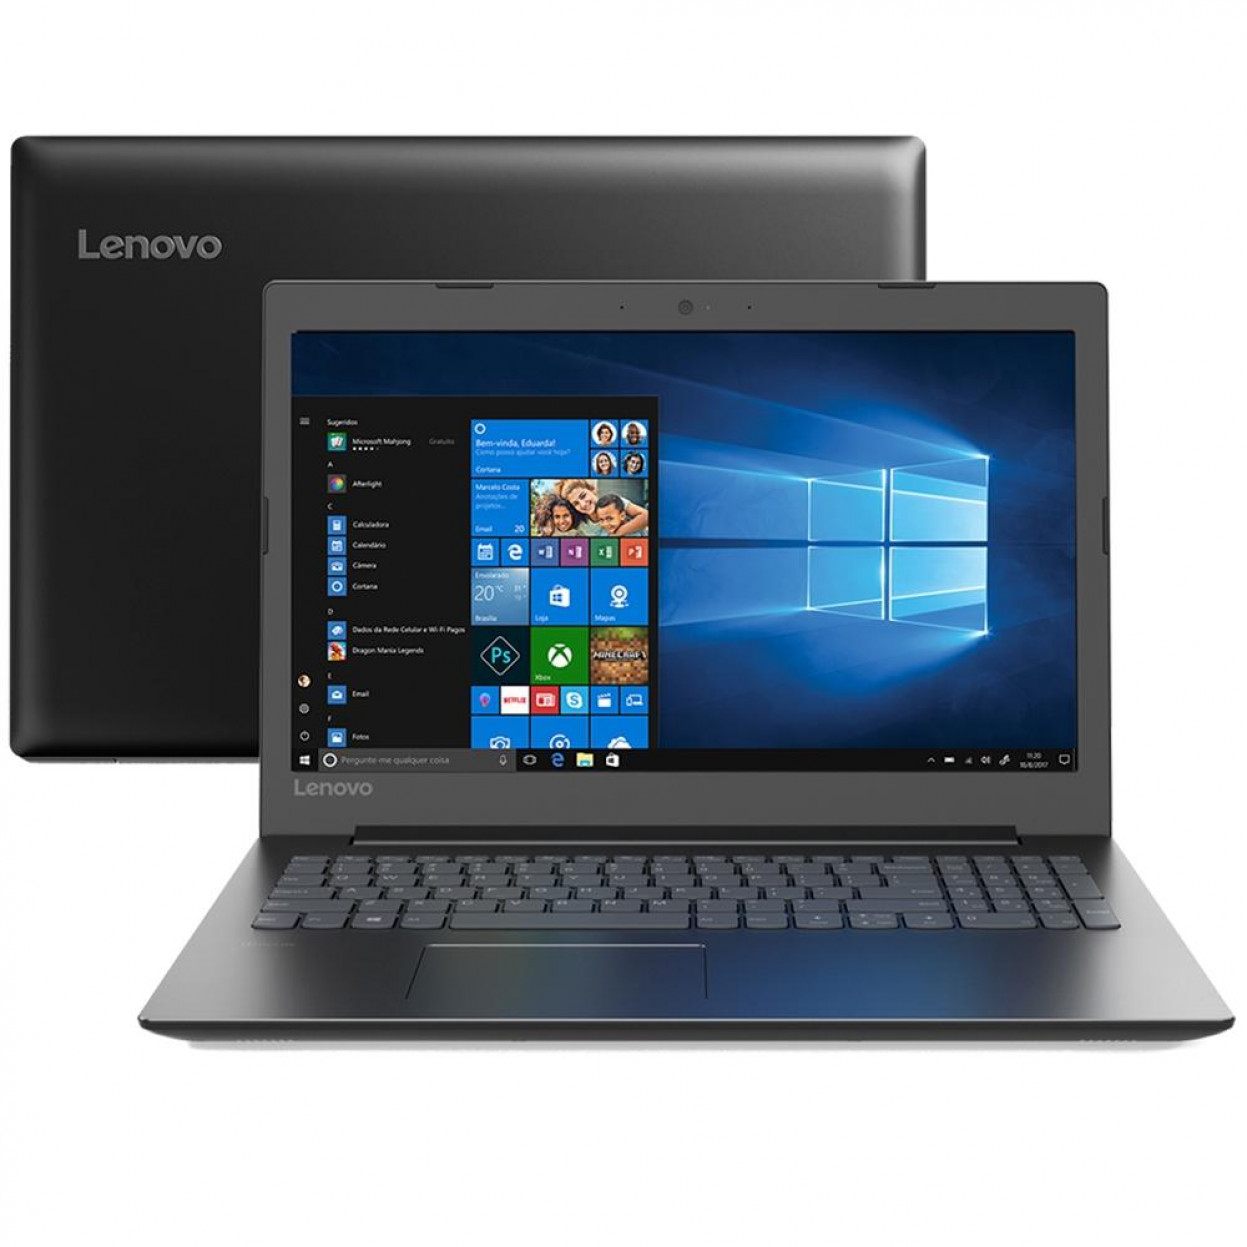 Notebook Lenovo B330 Core I5 8250u Memoria 8gb Ddr4 Ssd 480gb Tela 15.6' Fhd Windows 10 Home 